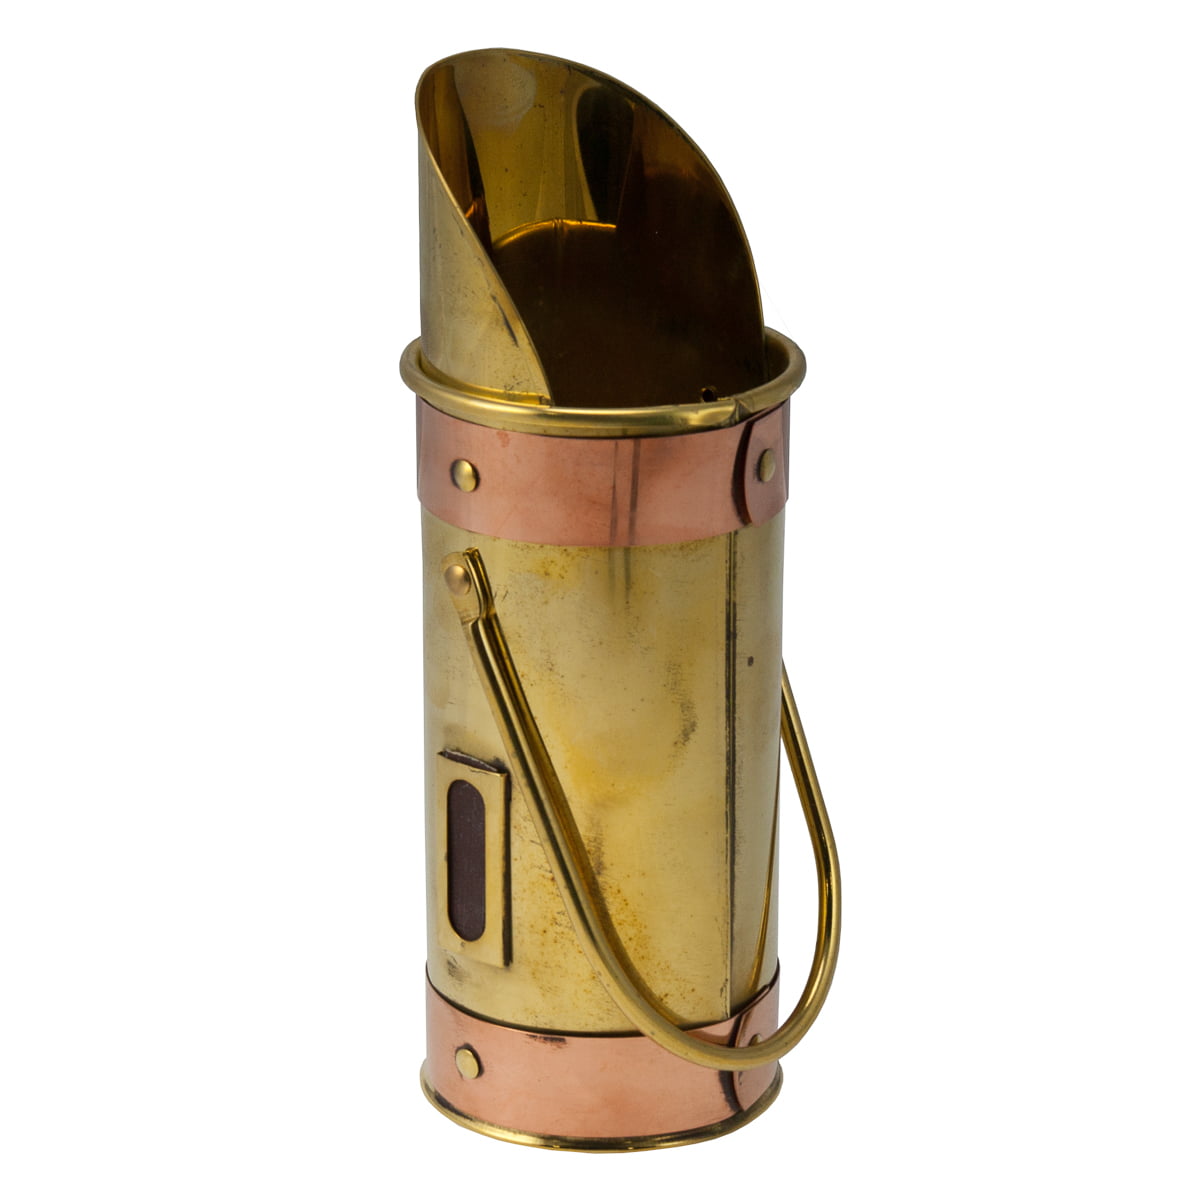 Buy Polished Brass Match Holder Striker Copper Box Safety Long Fireplace Decorative at Walmart.com